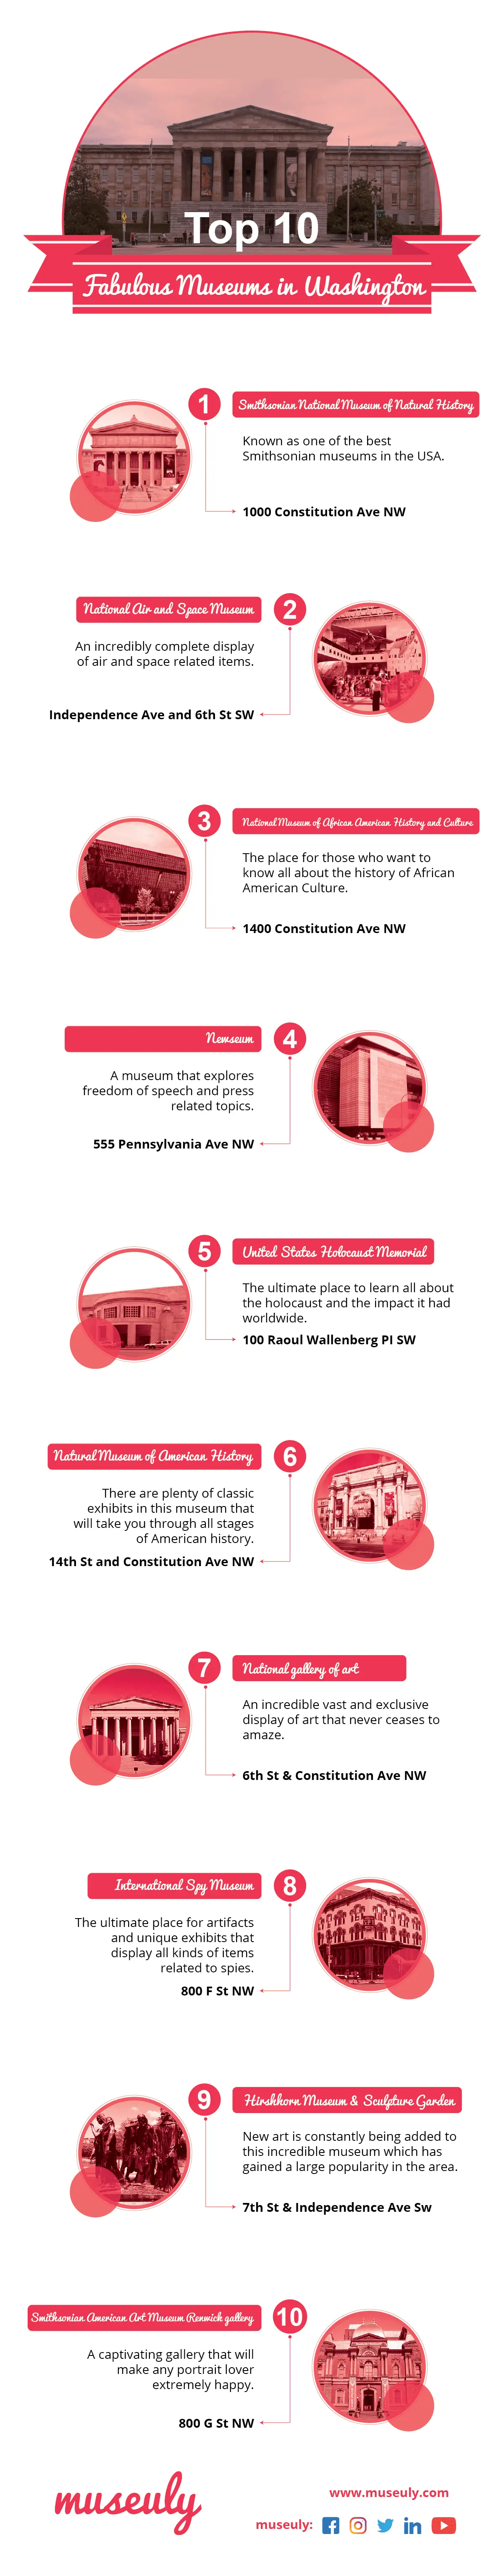 Top Washington museums - infographic